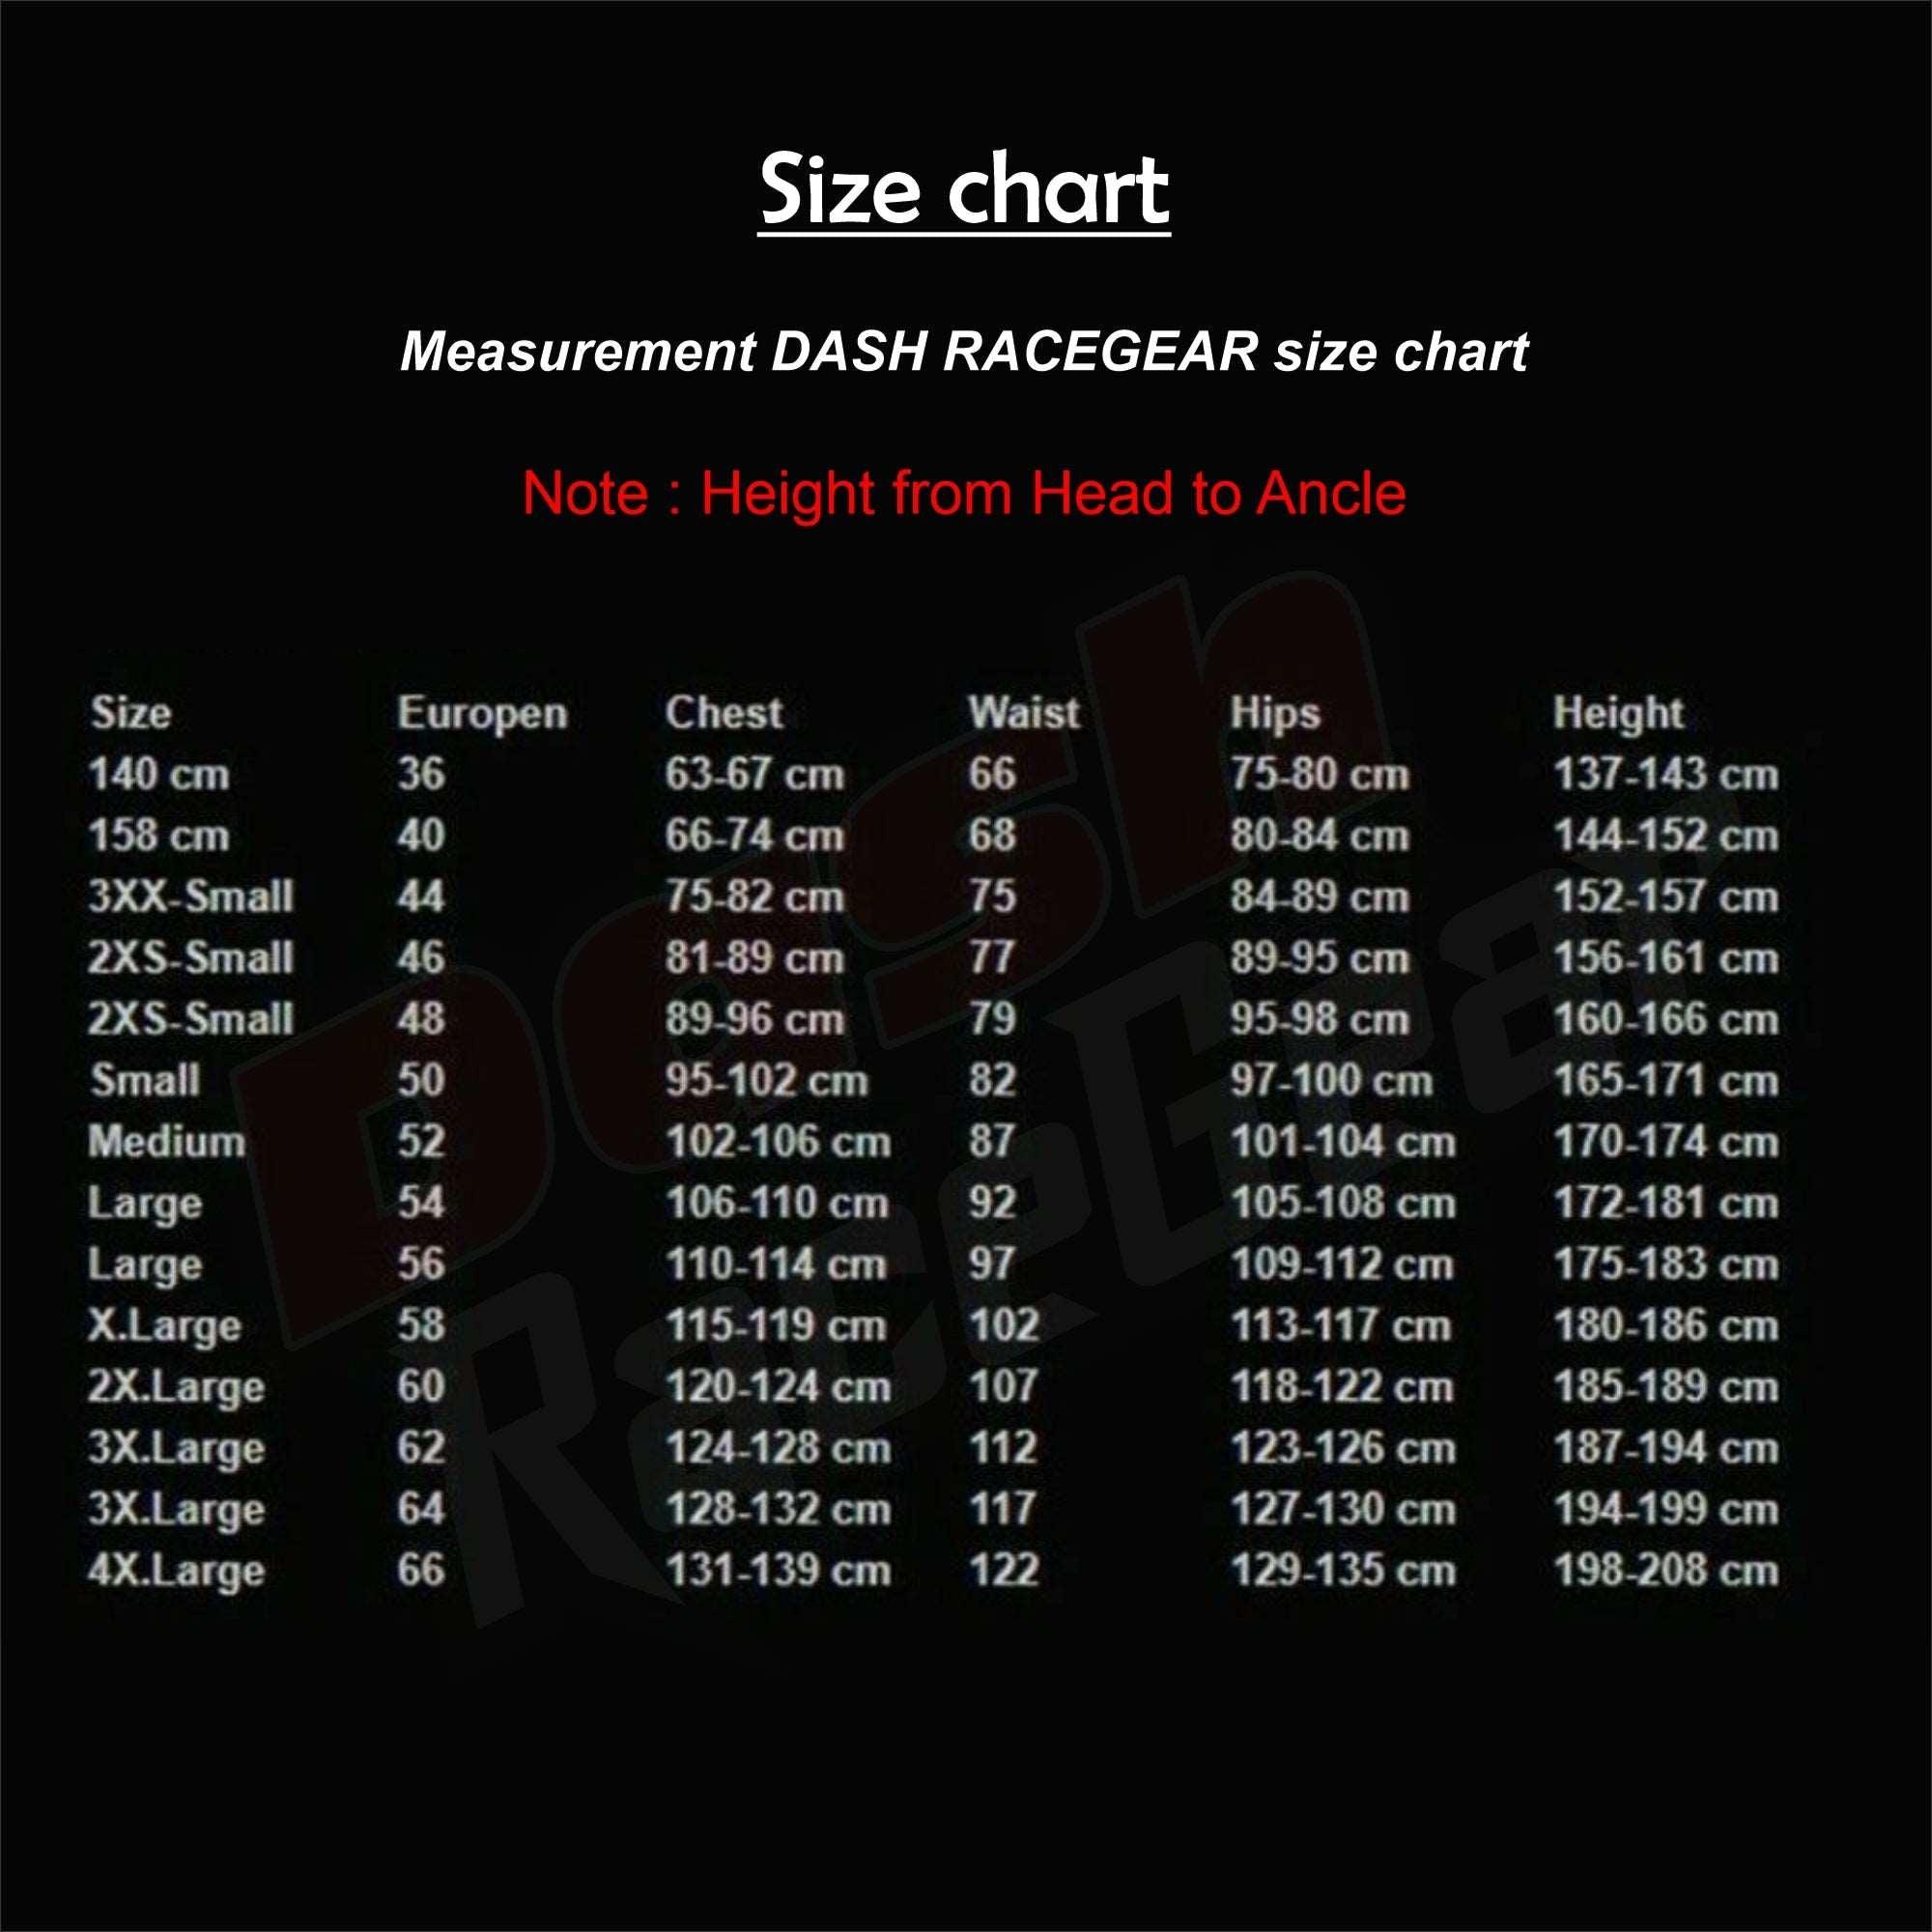 Lance Stroll Racing Point, 2019 Race Suit DASH RACEGEAR